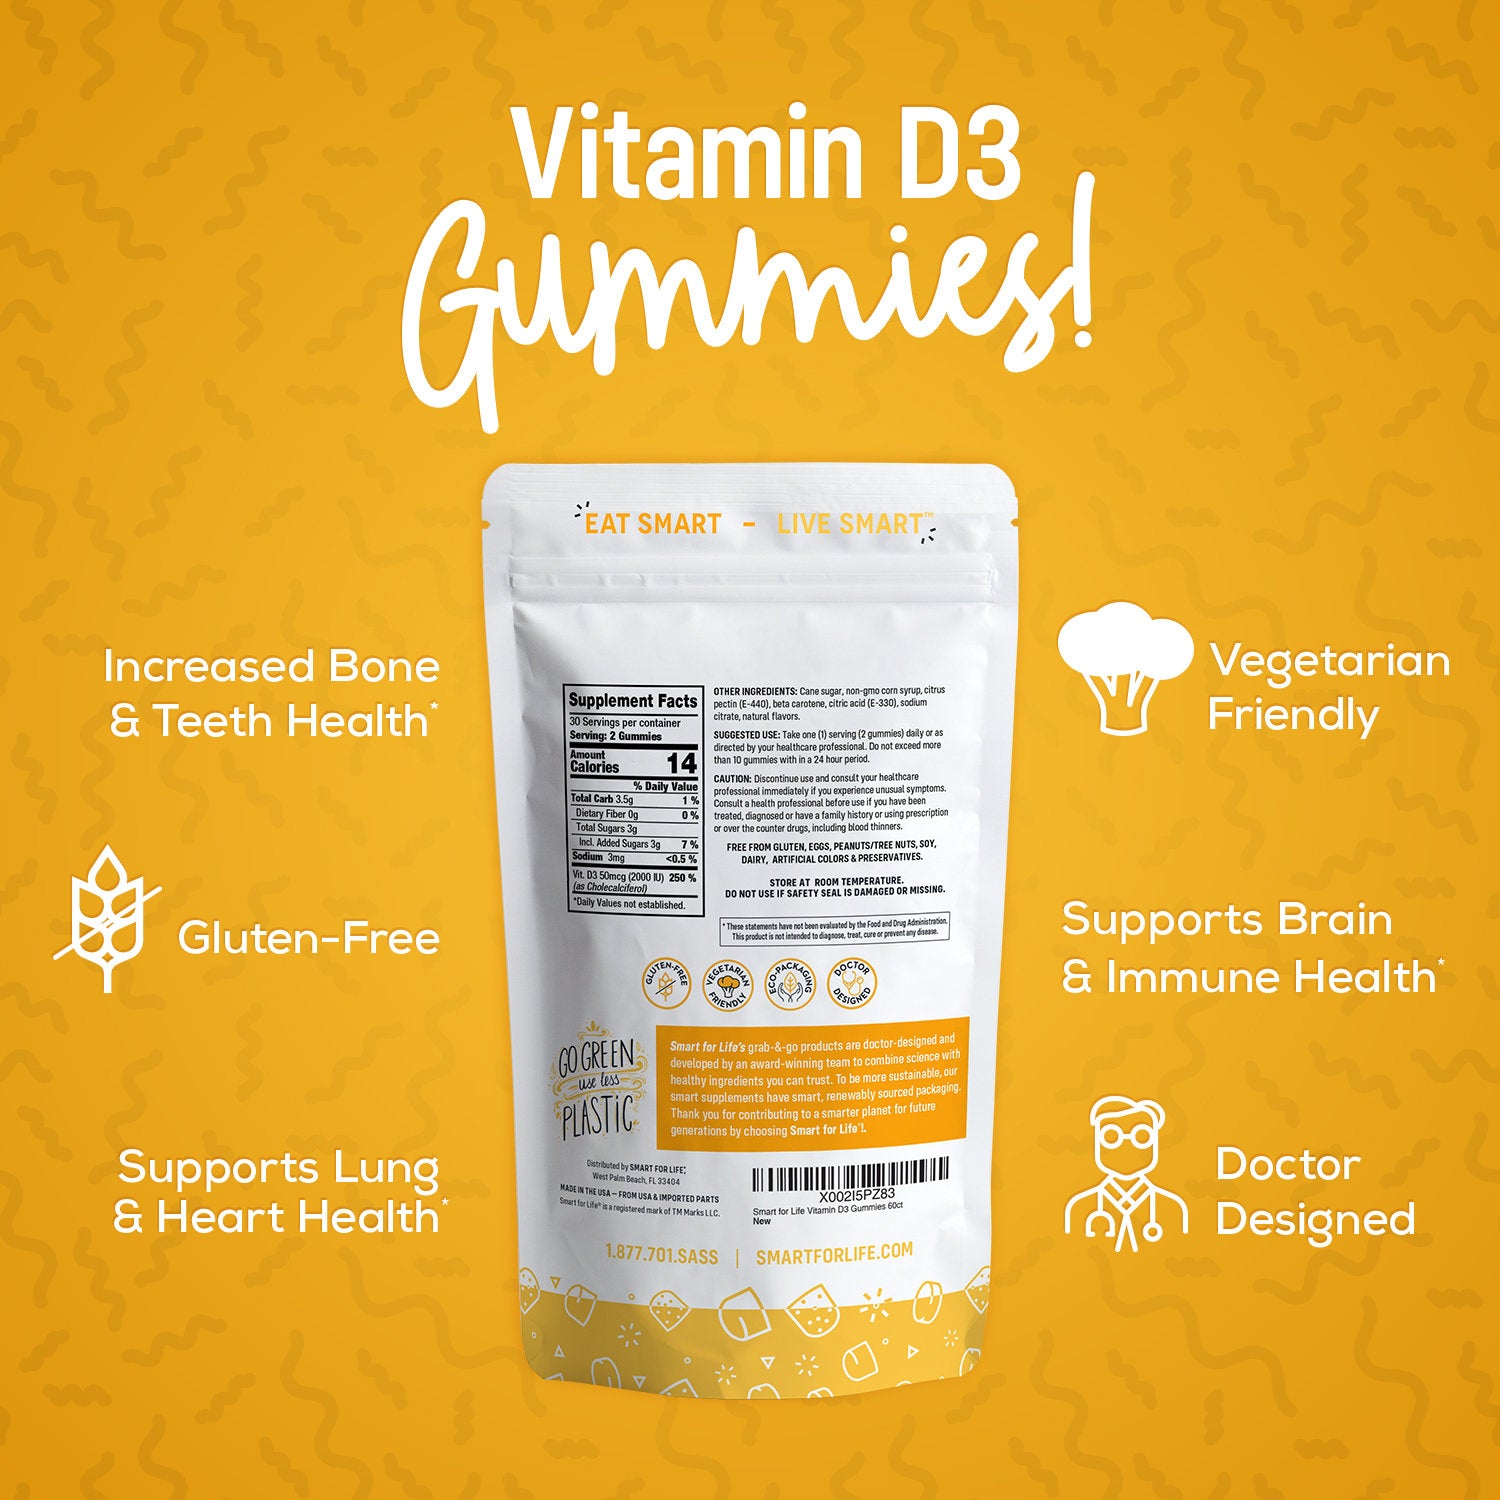 Vitamin D3 Gummies (60Ct Mixed Flavor - Orange, Lemon, Strawberry) - Smart for Life Store